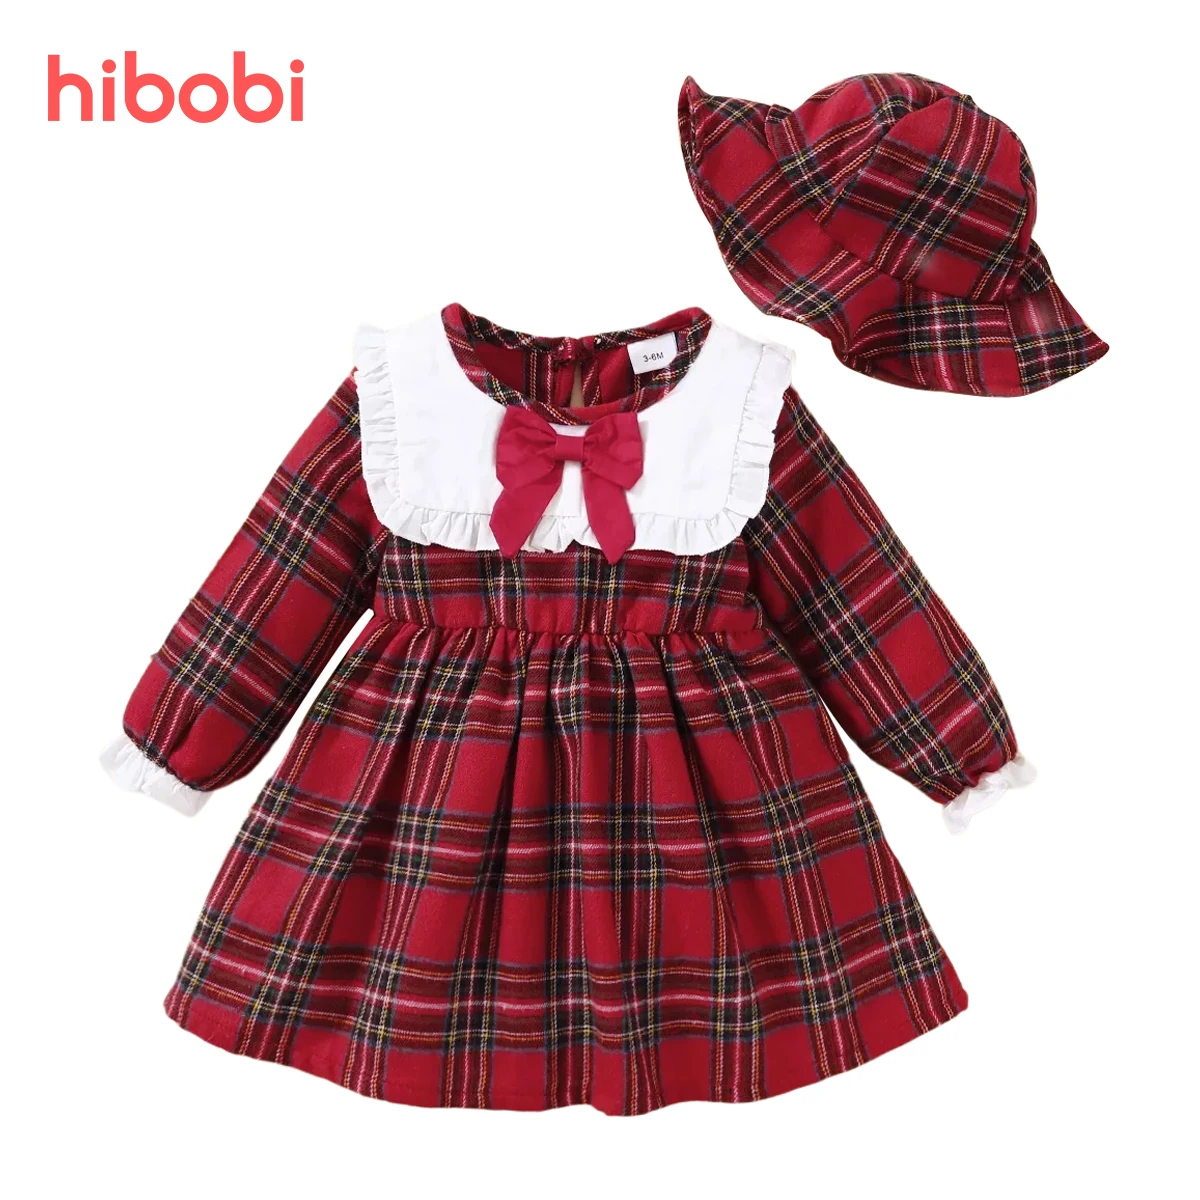 

hibobi 2pcs Baby Girl Dress Set Knee Length Dresses Long Sleeve Bowknot Decor Dress with Hat For Infant Baby Girls Clothes